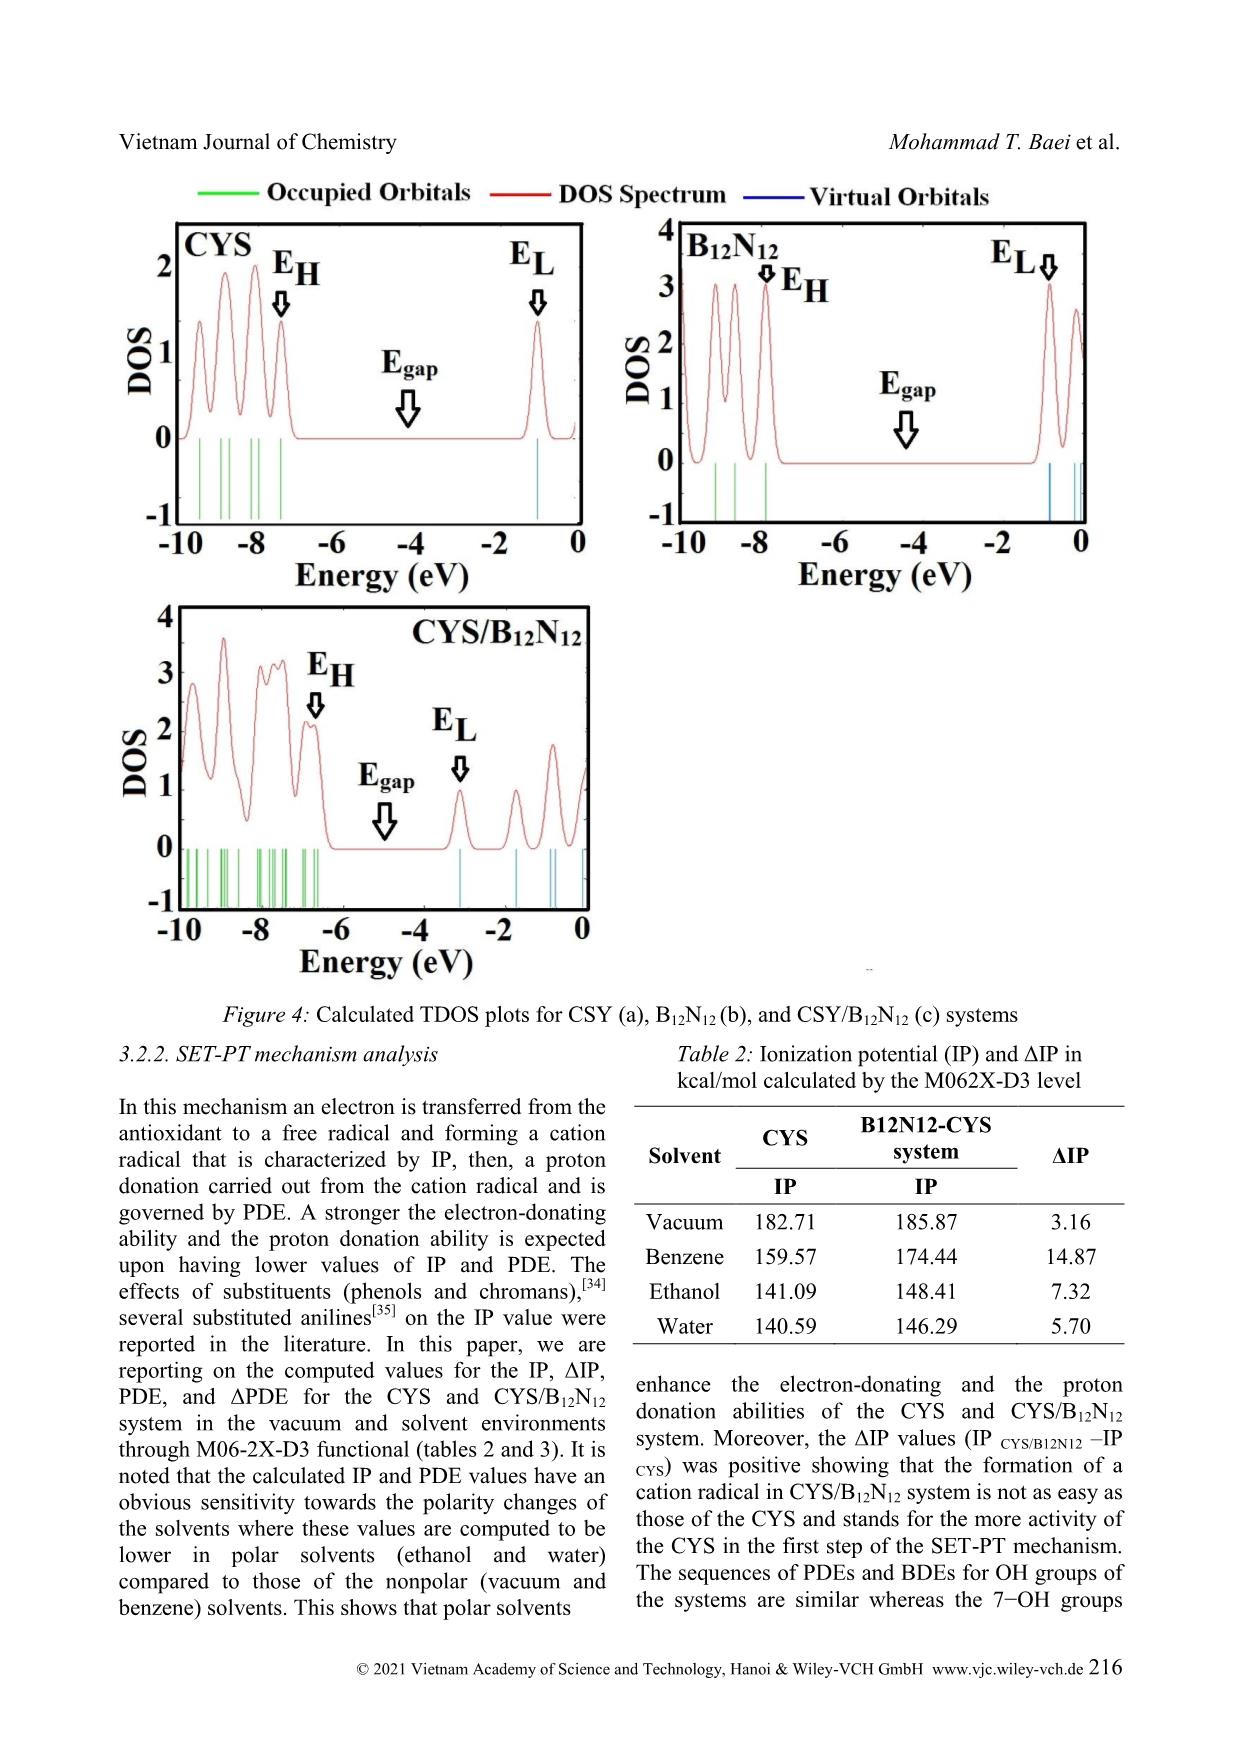 Chrysin flavonoid adsorbed on B12N12 nanocage - A novel antioxidant nanomaterial trang 6